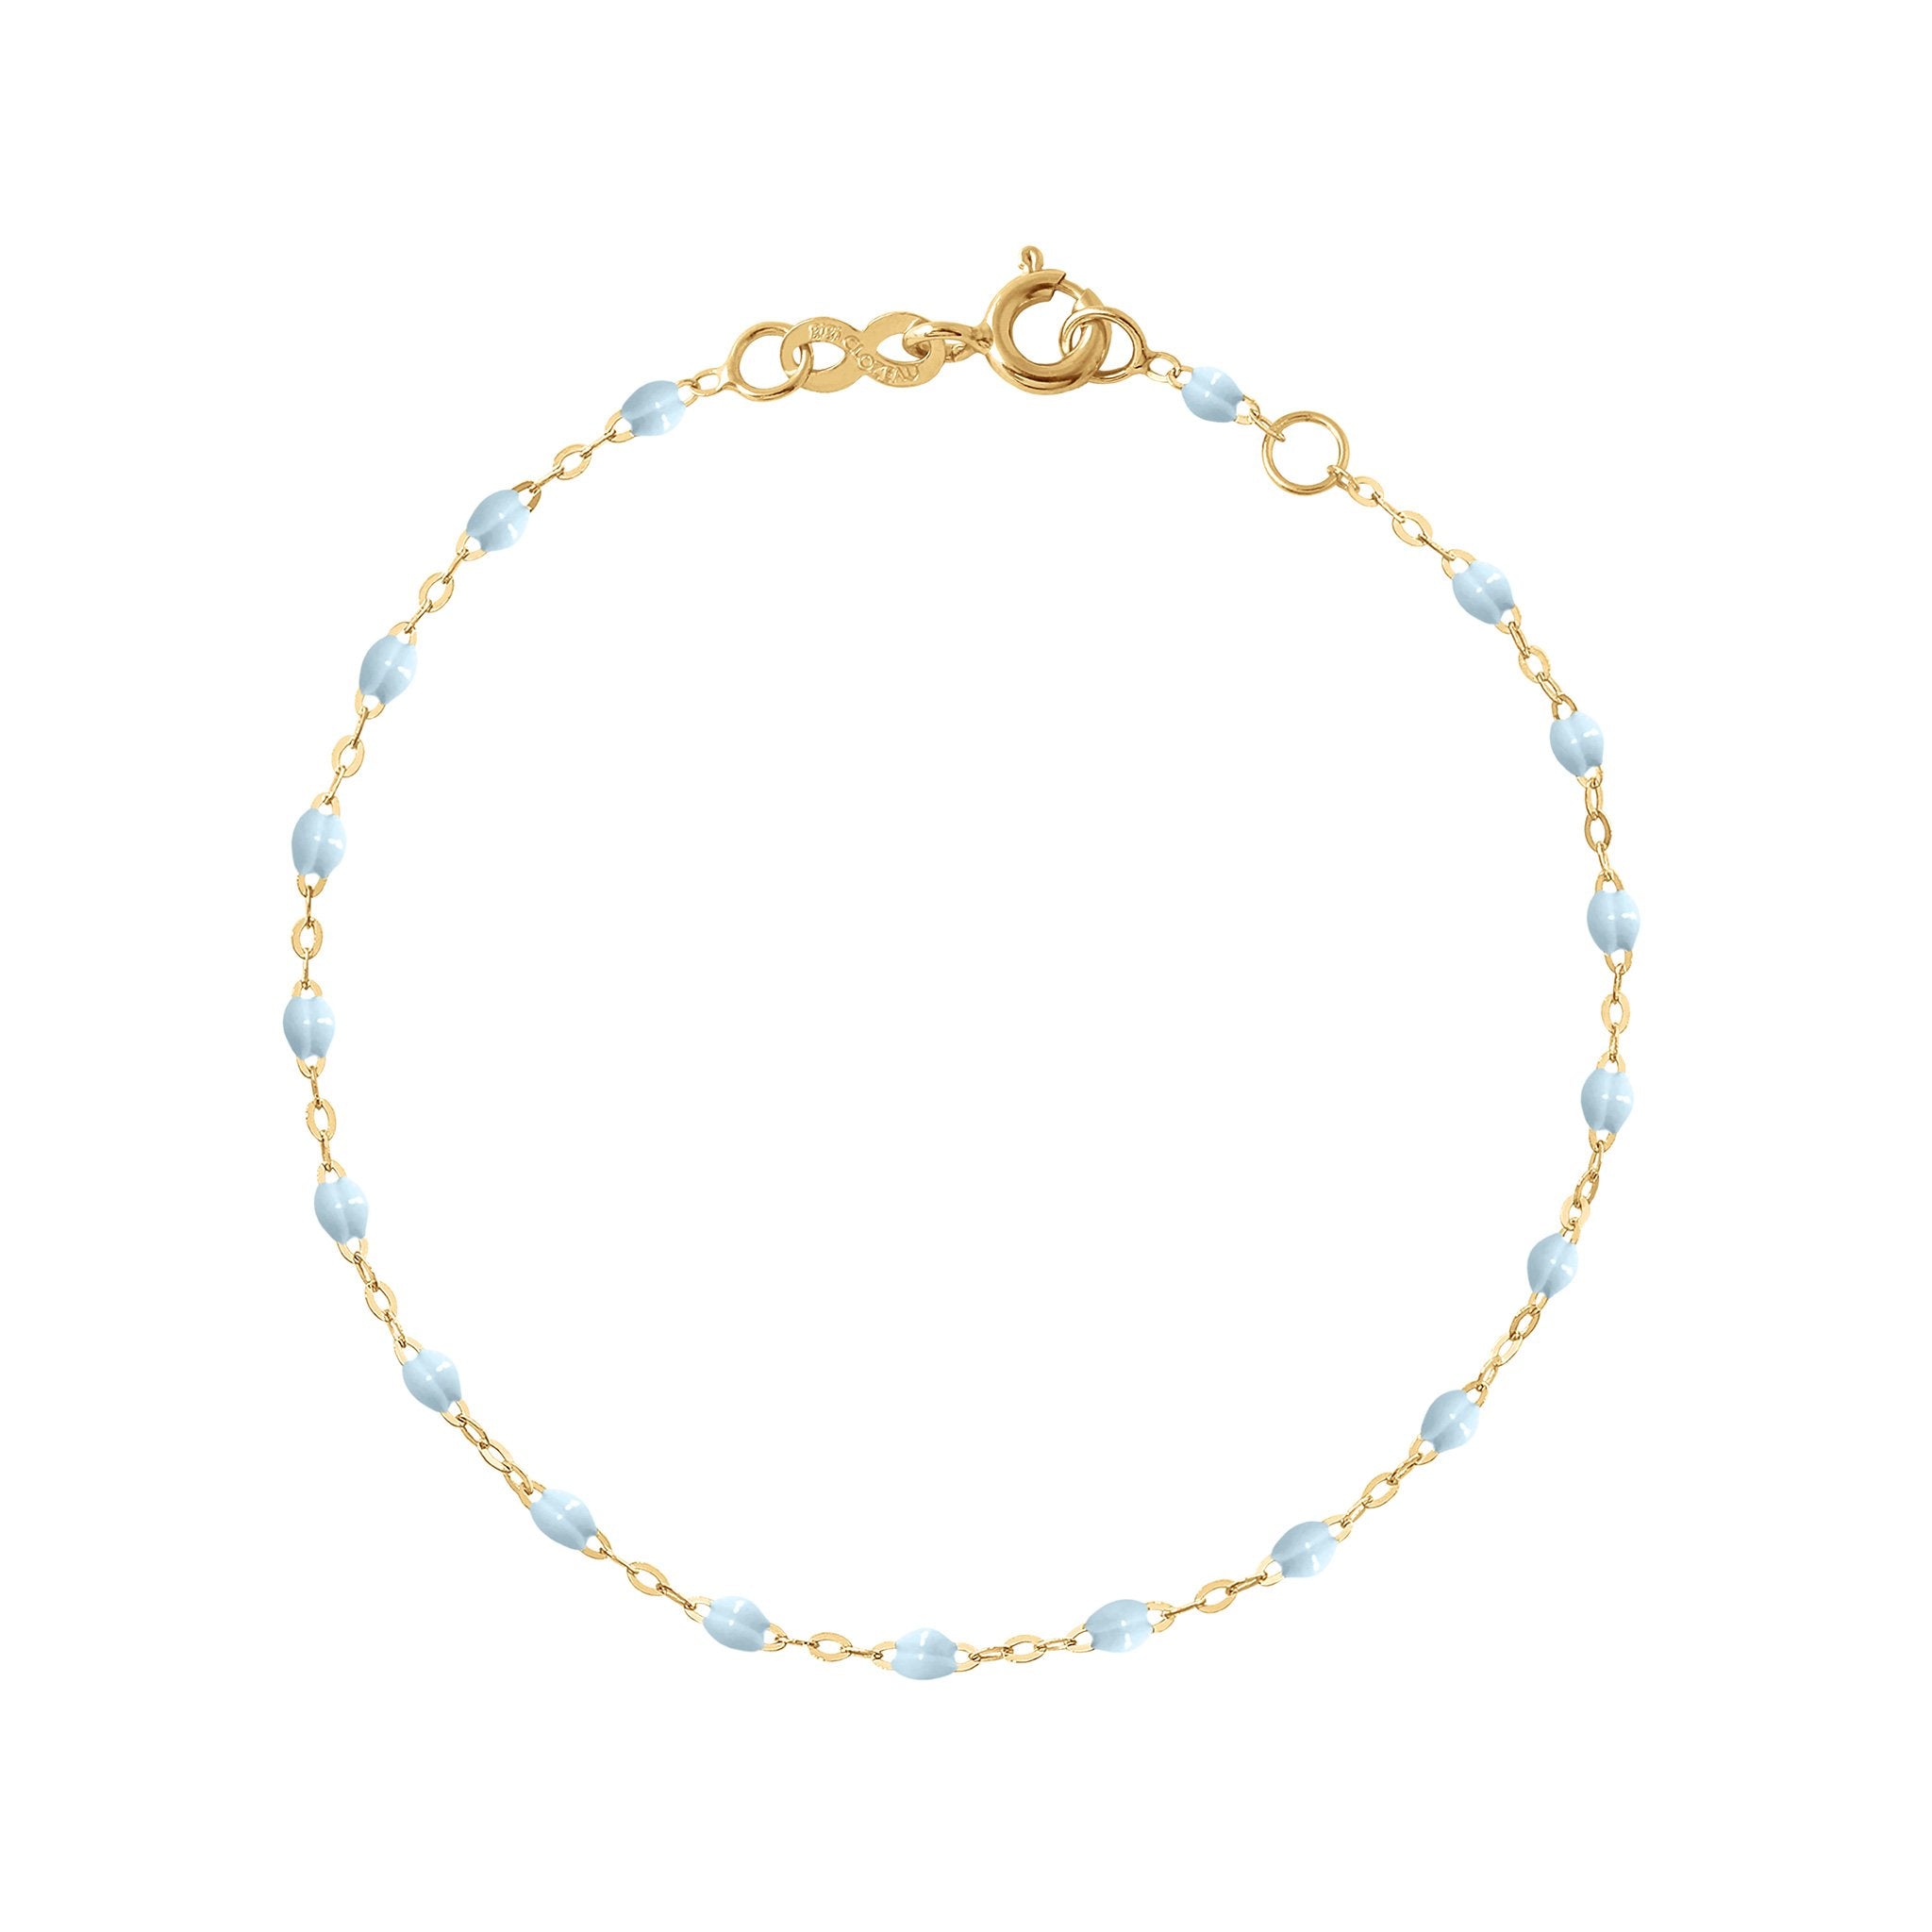 Bracelet bleu layette Classique Gigi, or jaune, 15 cm classique gigi Référence :  b3gi001j1515xx -1